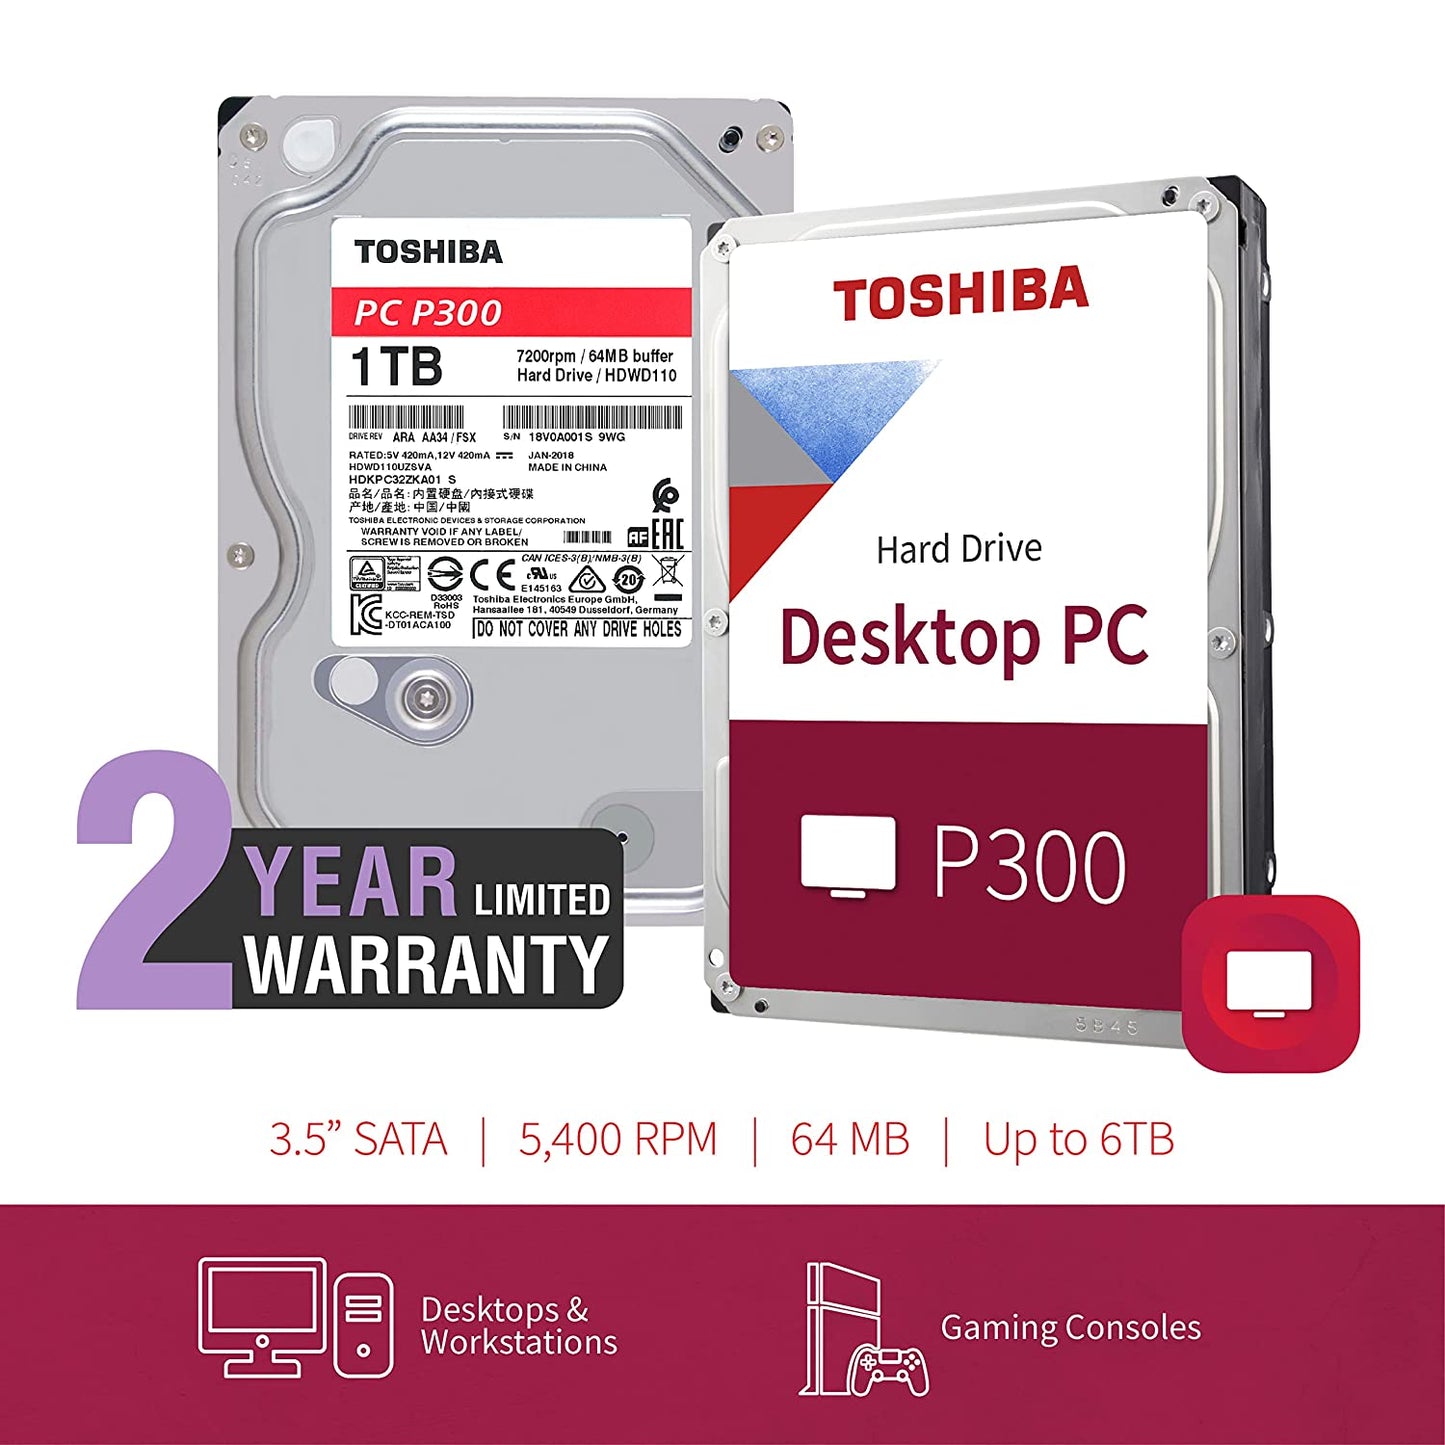 Toshiba P300 Internal 1TB Desktop PC HDD 7200 RPM Hard Drive